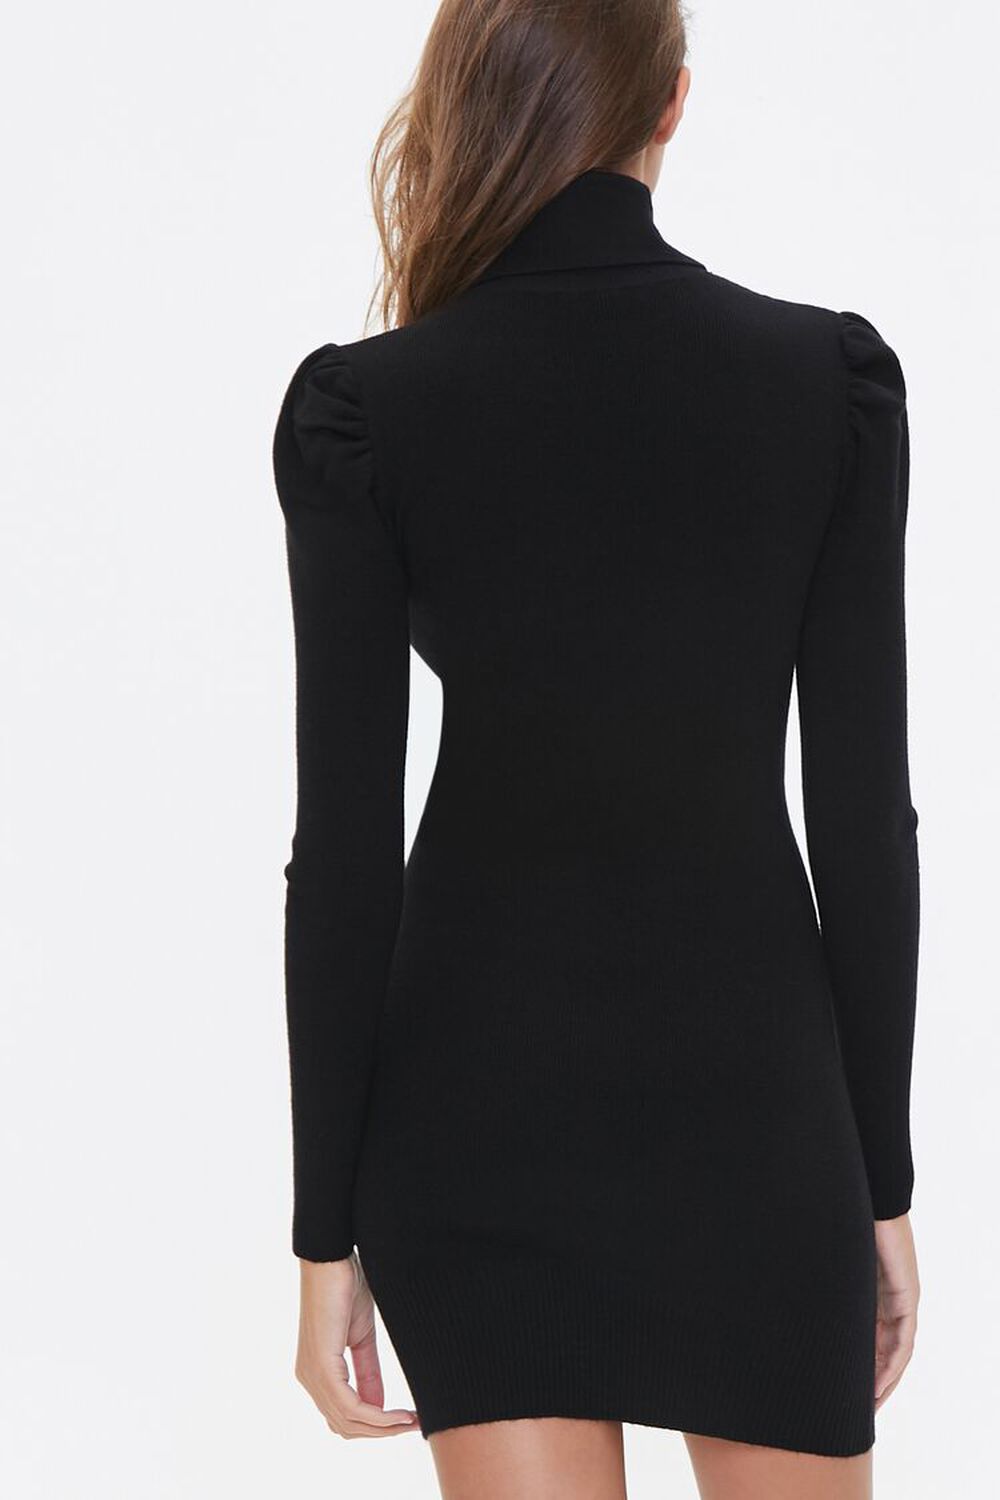 BLACK Turtleneck Sweater Dress, image 3